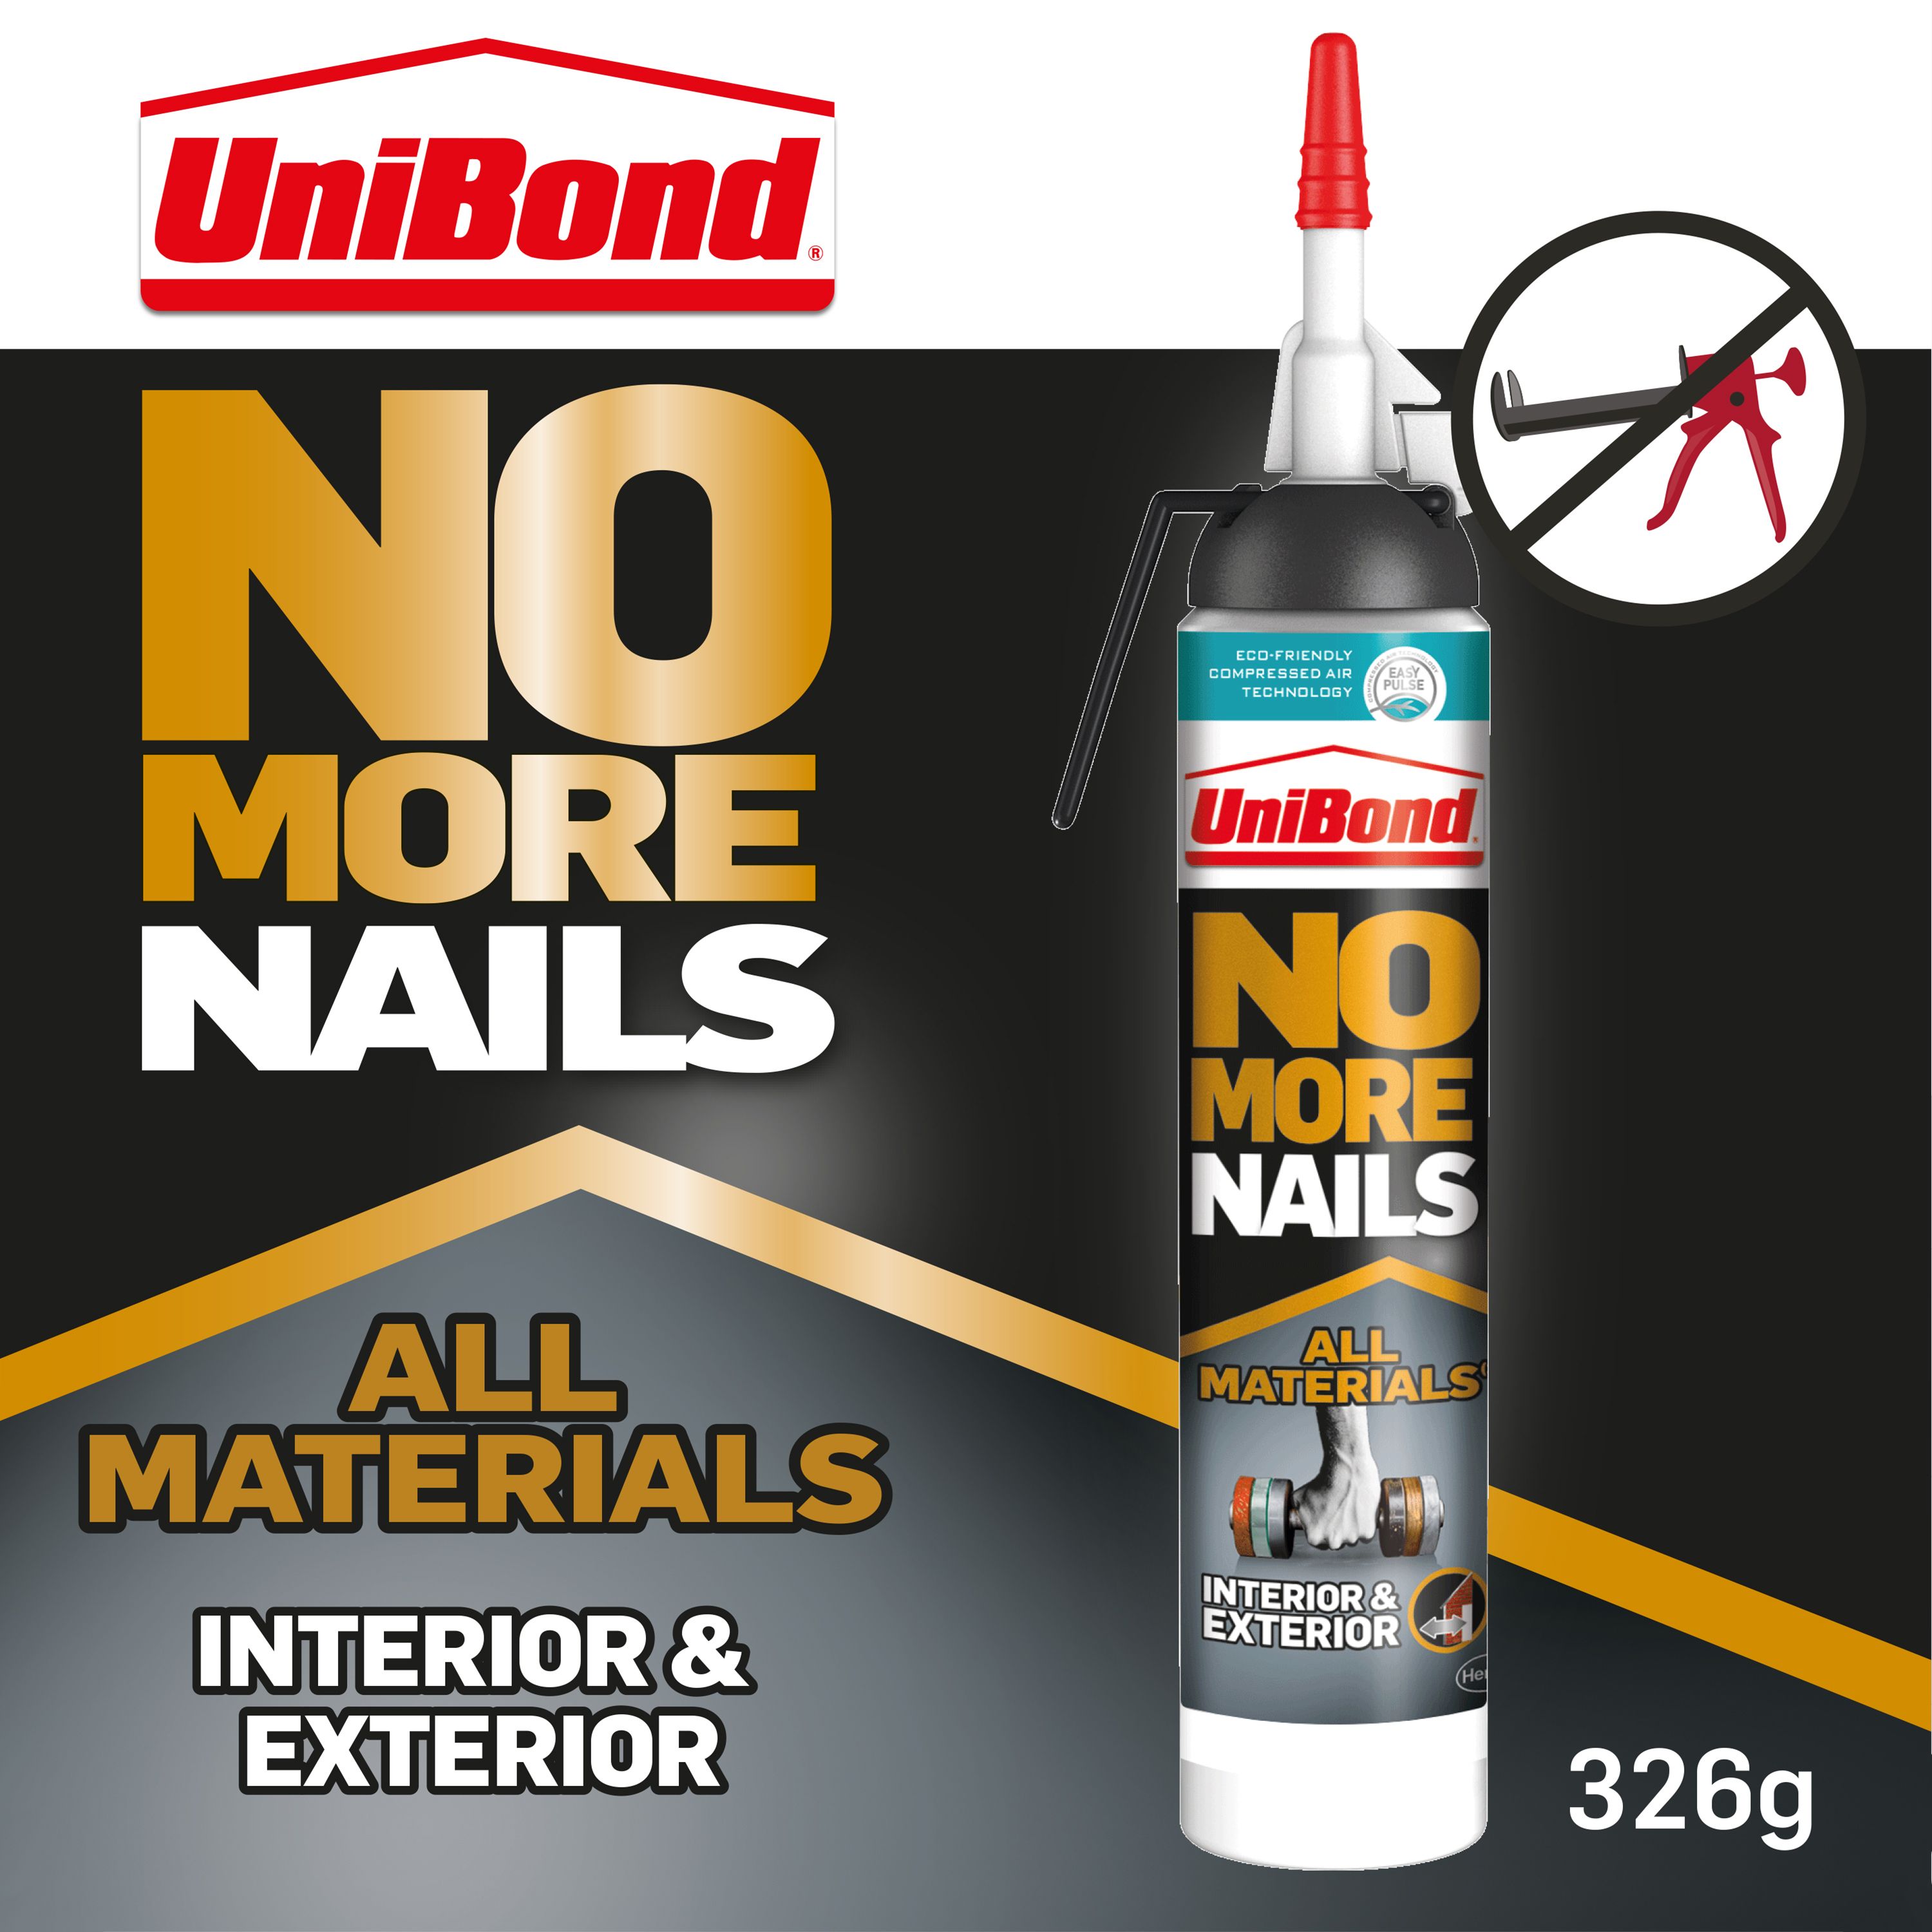 UniBond No More Nails Easy Pulse Interior & Exterior White All materials Grab adhesive 326g